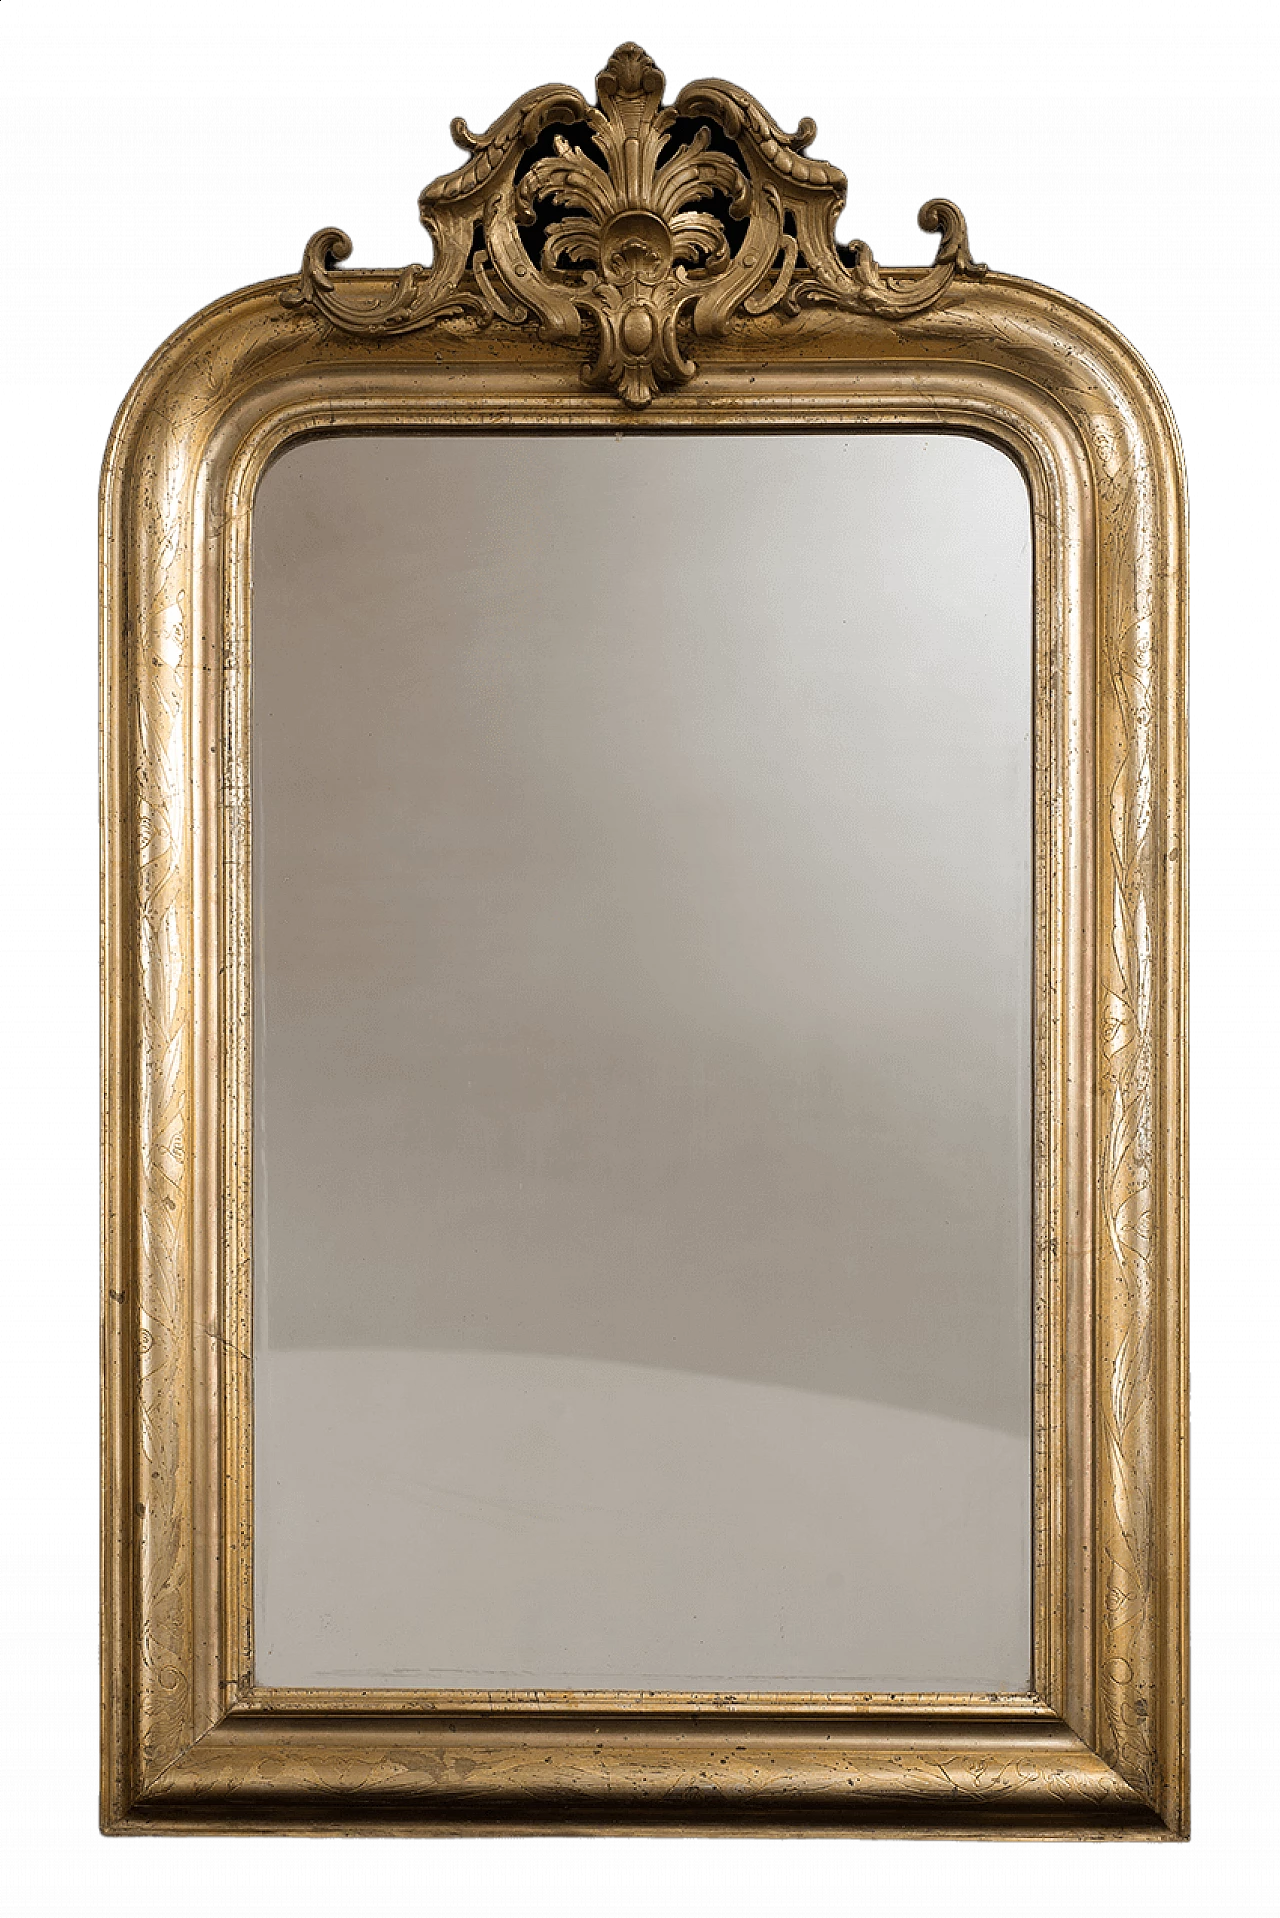 Napoleon III style mirror in gilded wood, 19th century 1470145